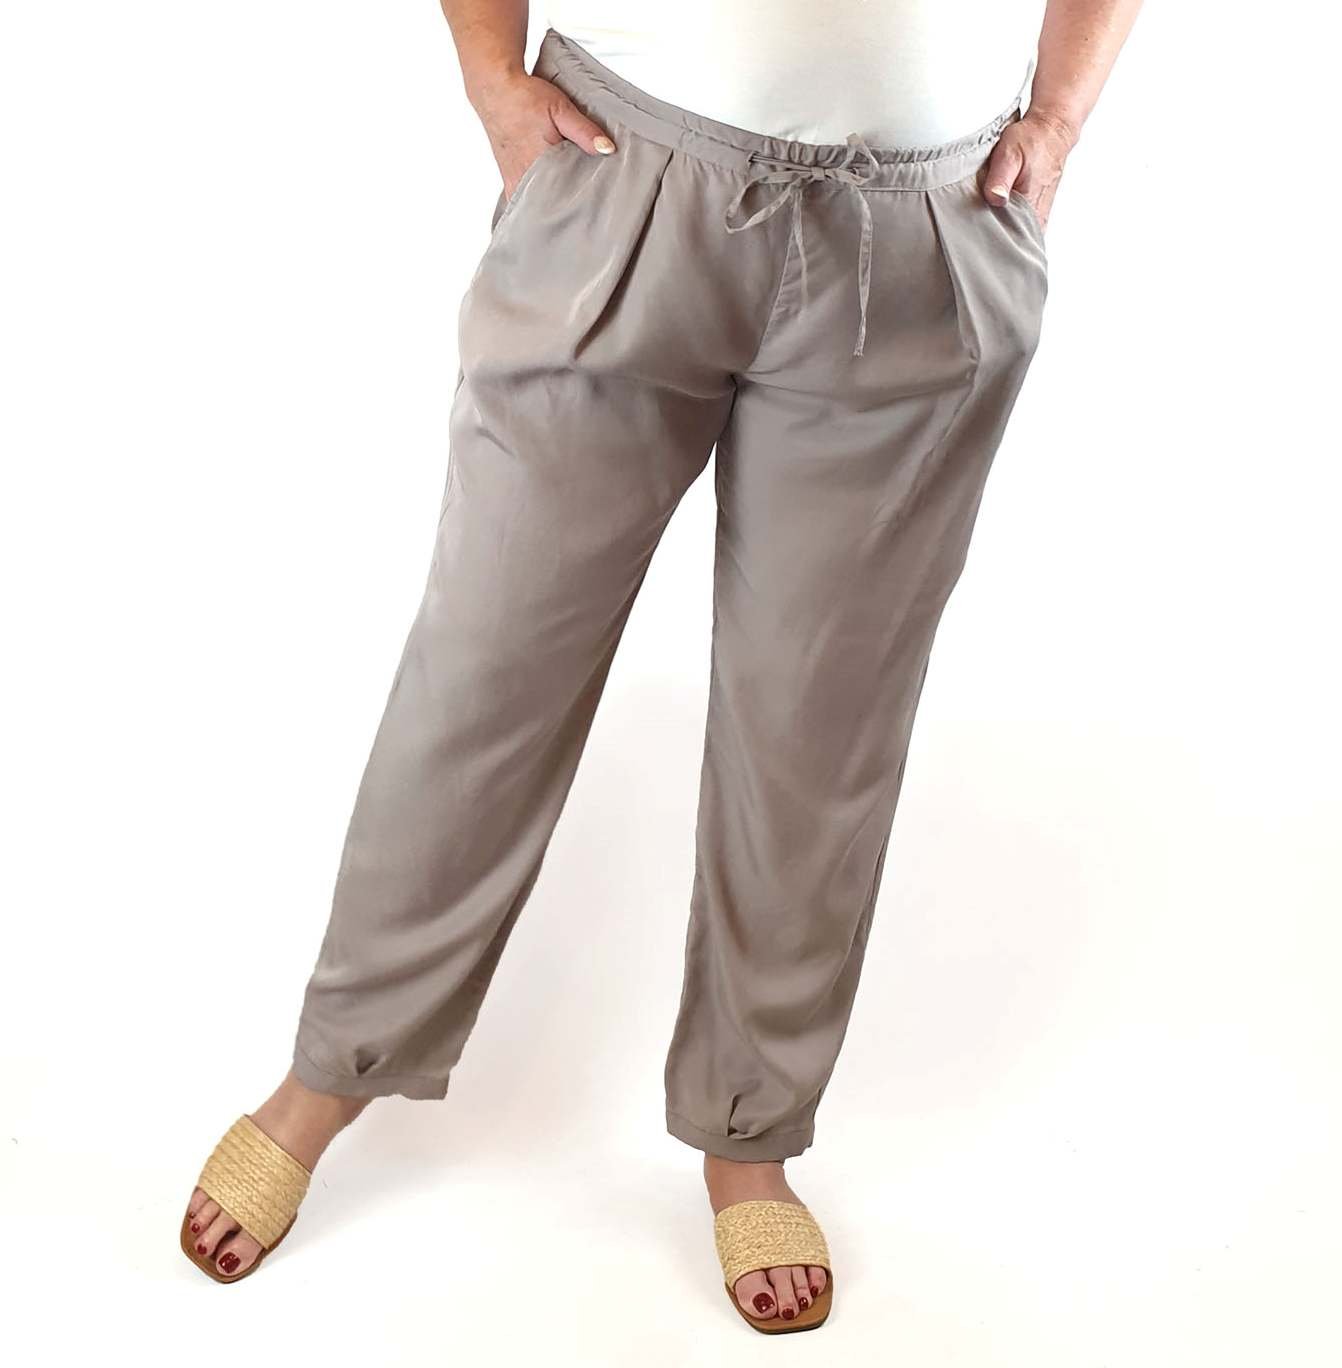 Elk faun/light brown tencel drawstring pants size XL (best fits